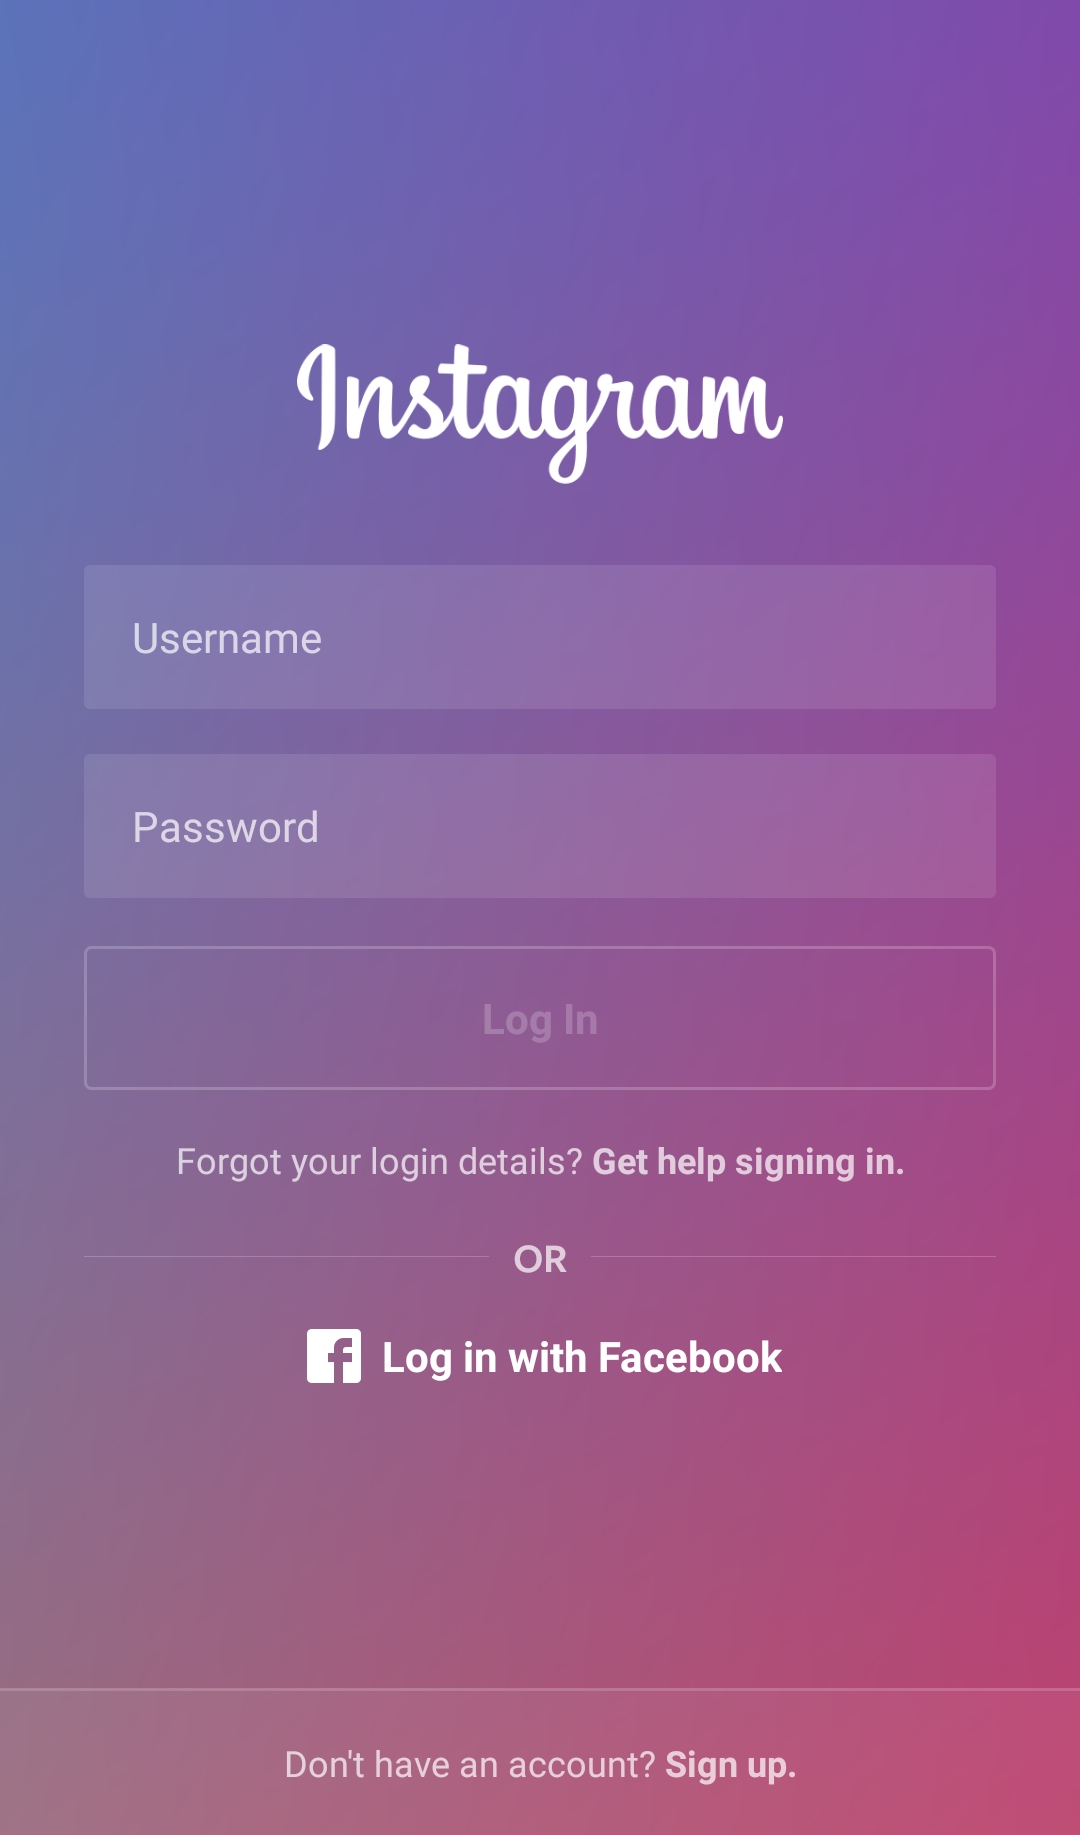 deskgram unable to identify instagram account